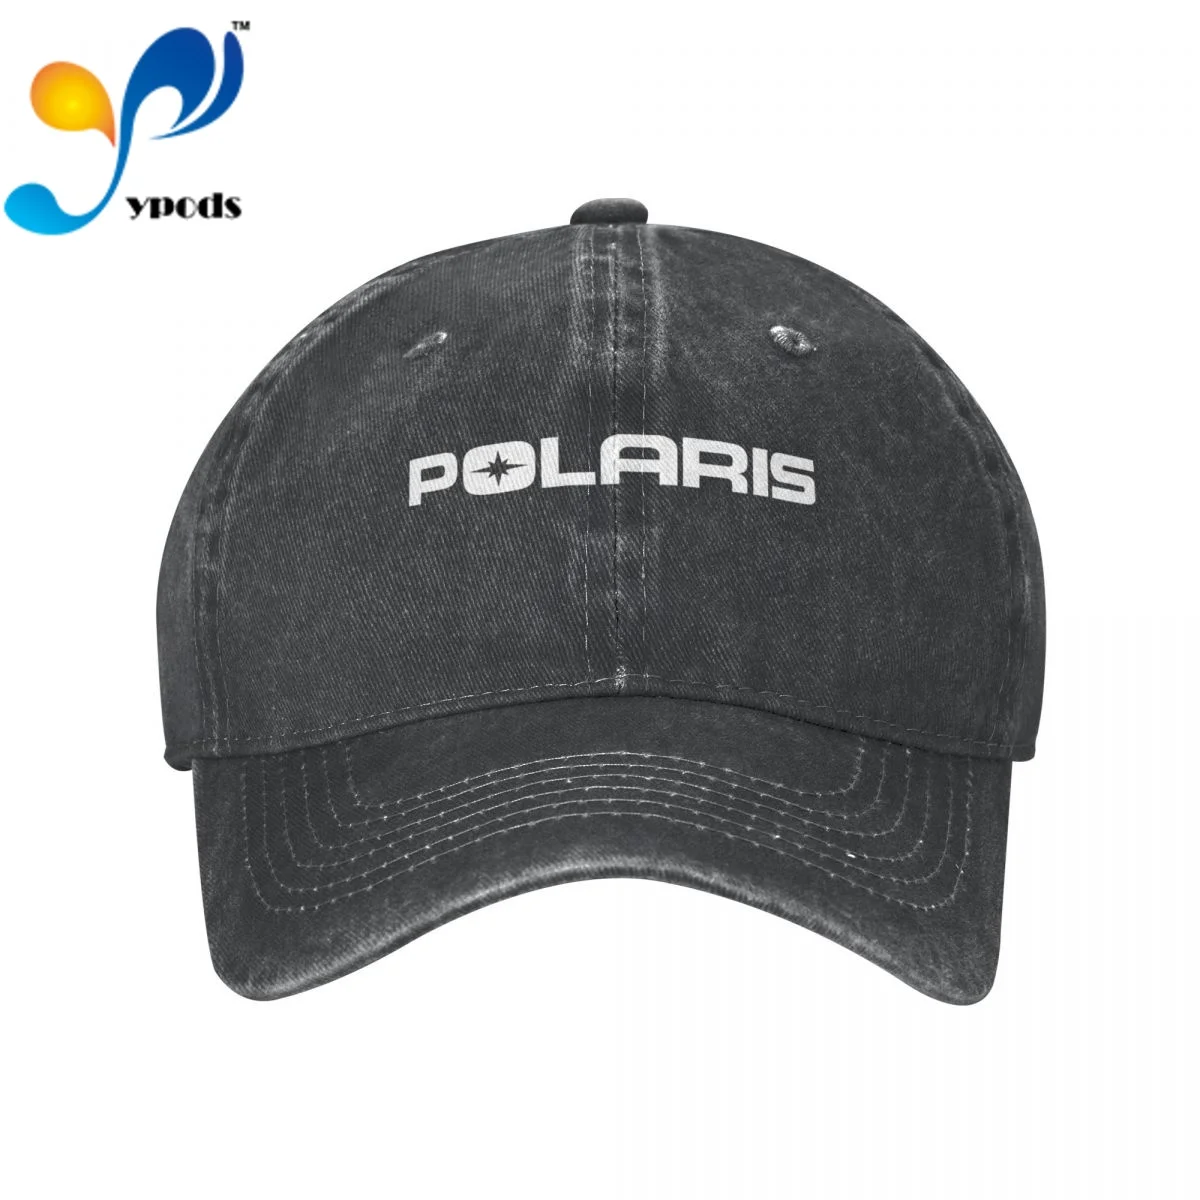 

Polaris Log Cotton Cap For Men Women Gorras Snapback Caps Baseball Caps Casquette Dad Hat